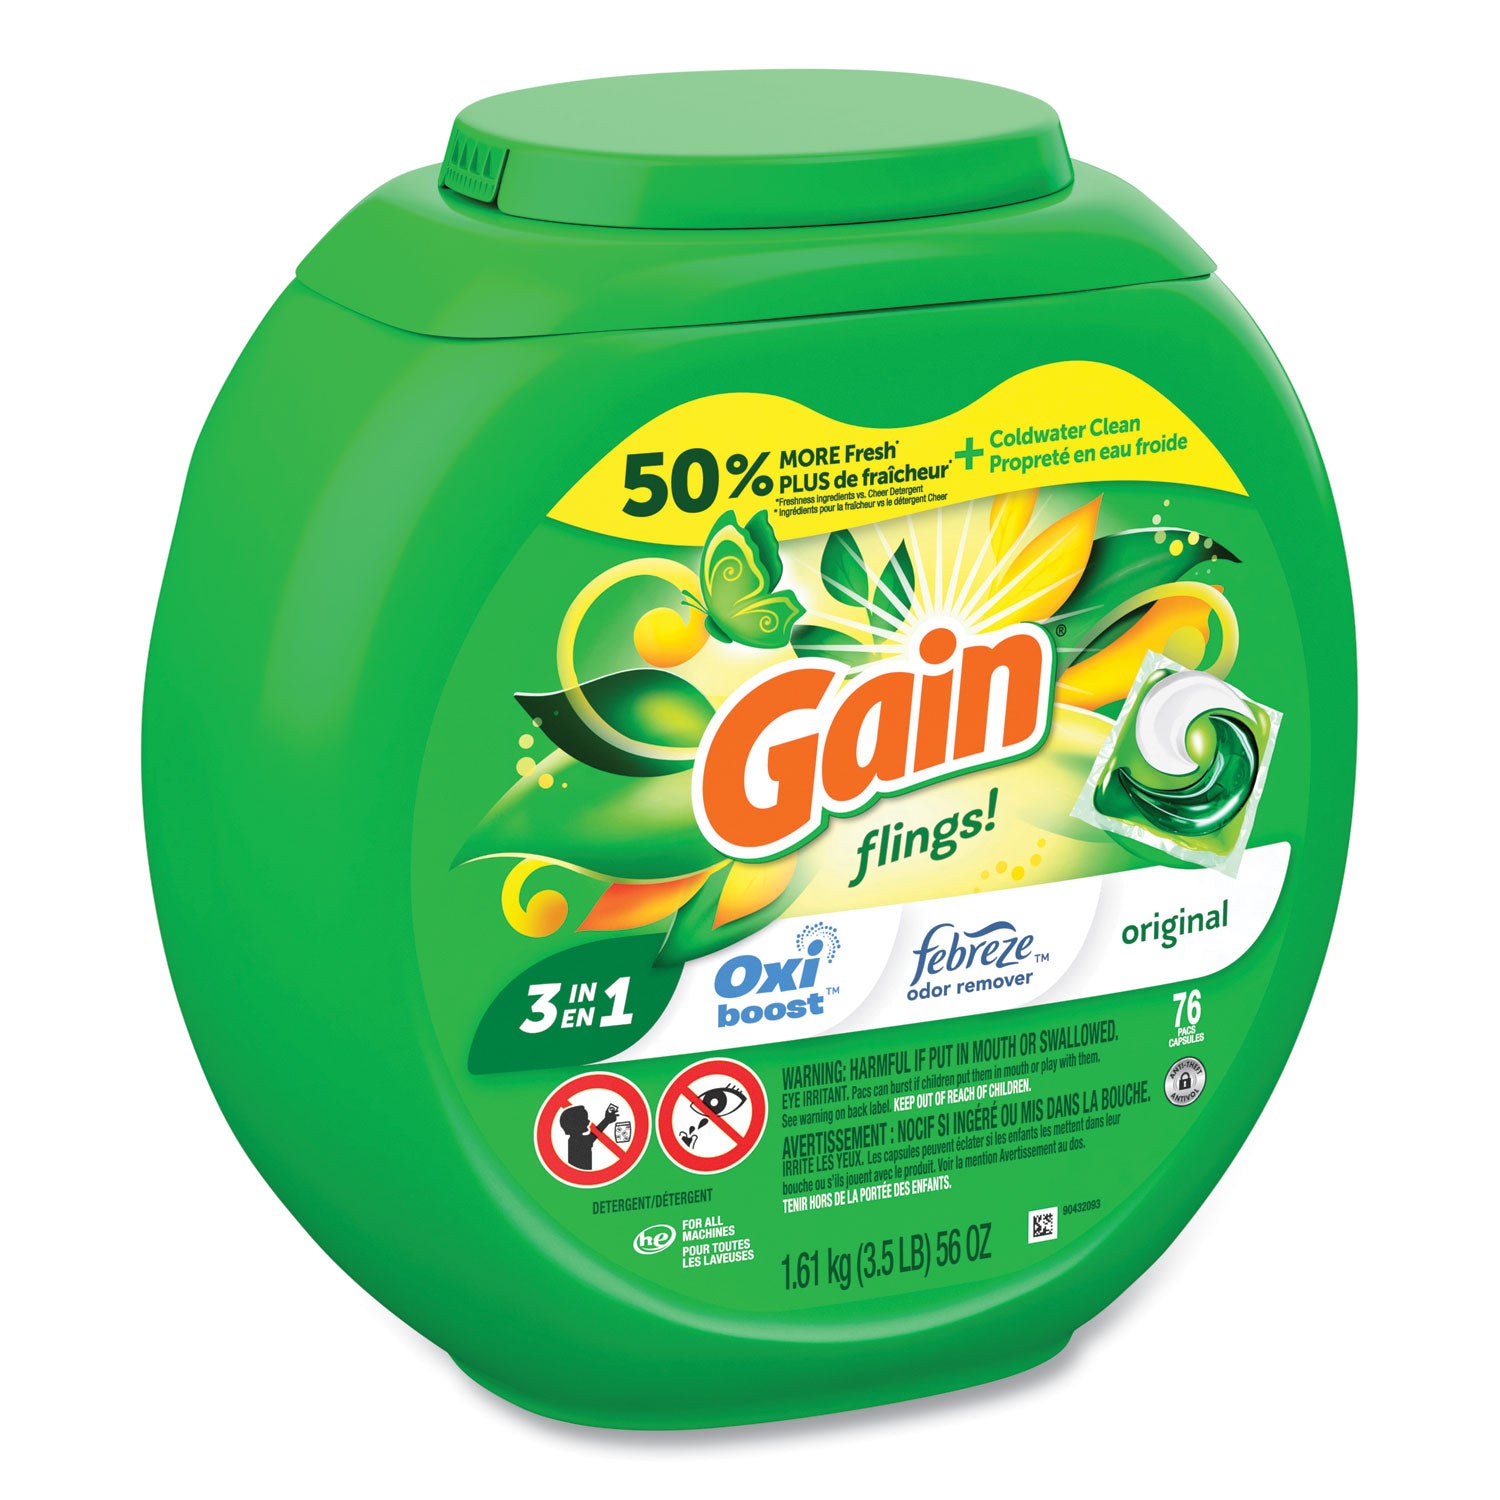 flings-detergent-pods-original-76-pods-tub_pgc09207pk - 2